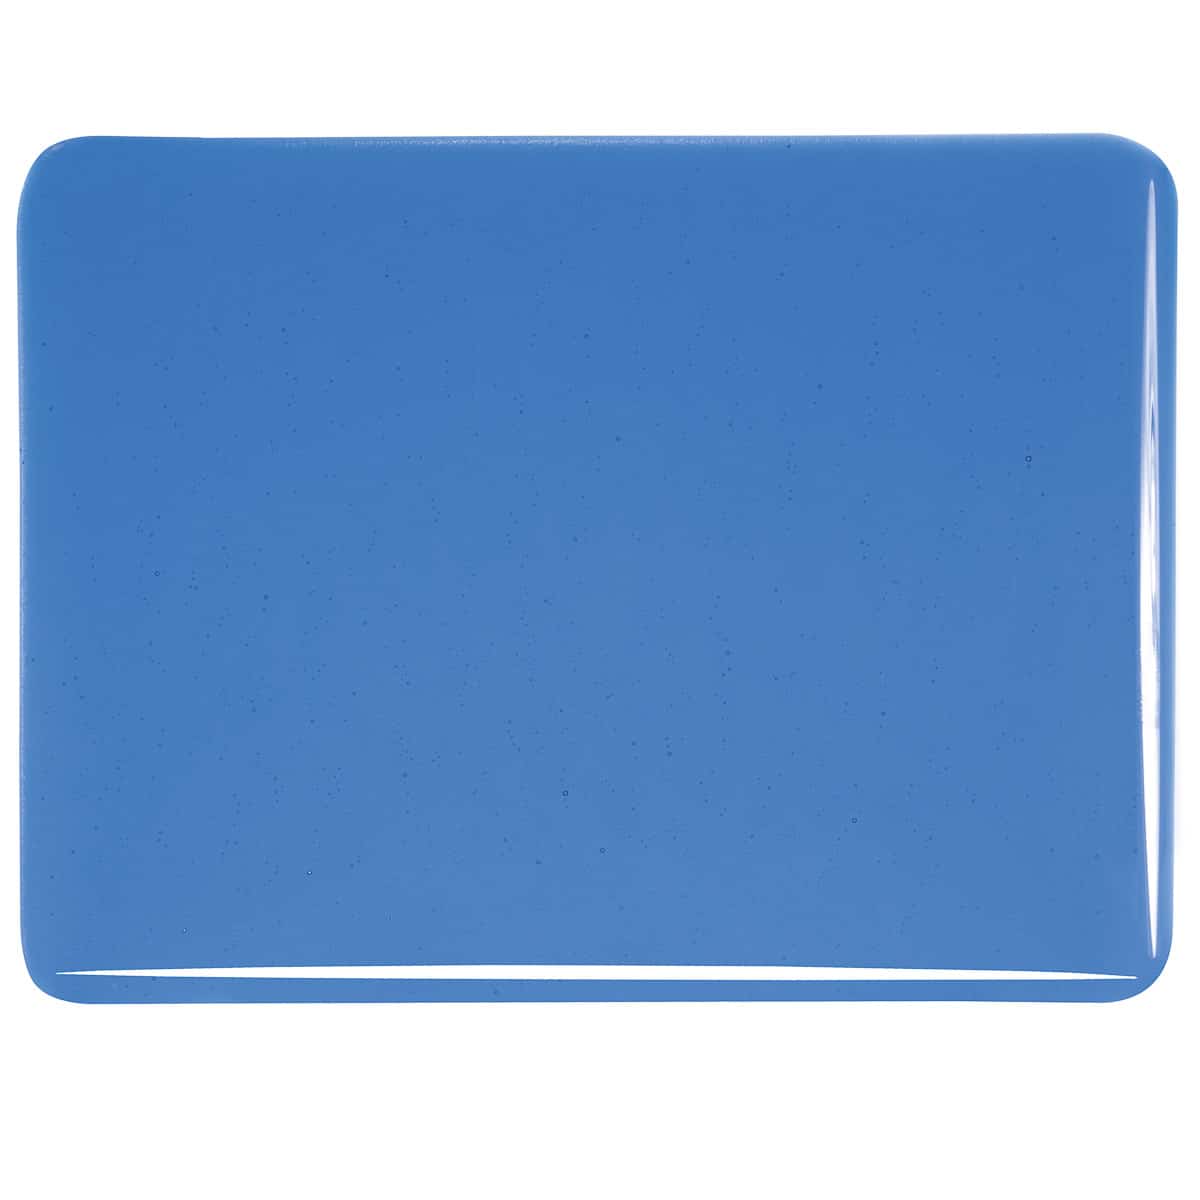 001464 True Blue transparent sheet glass swatch